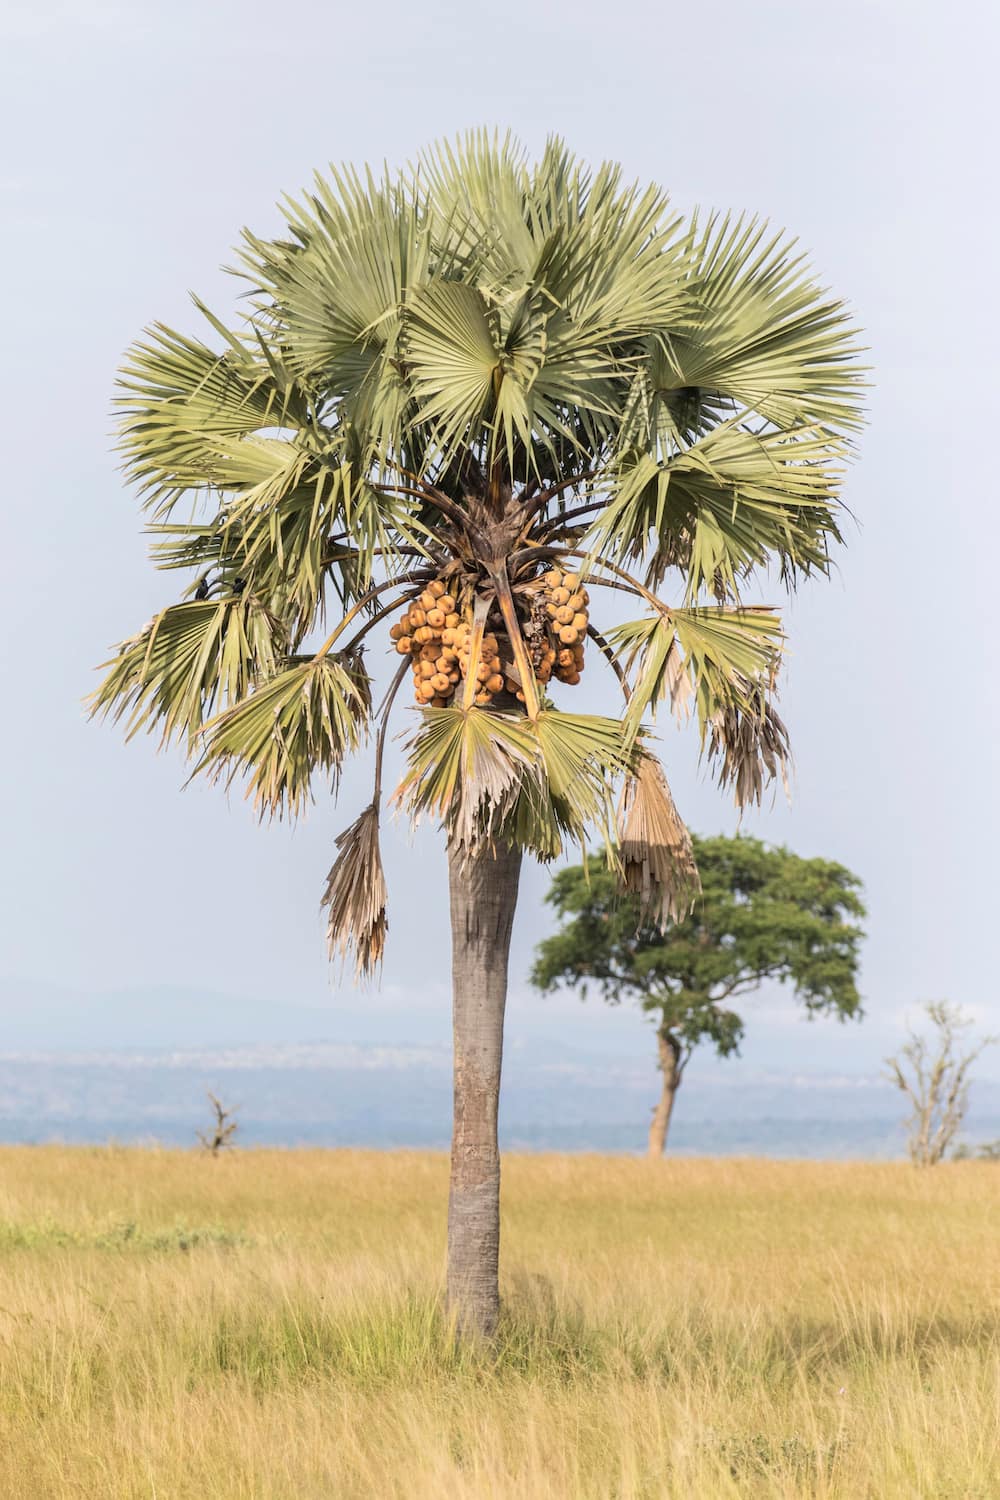 How can I identify my palm tree?